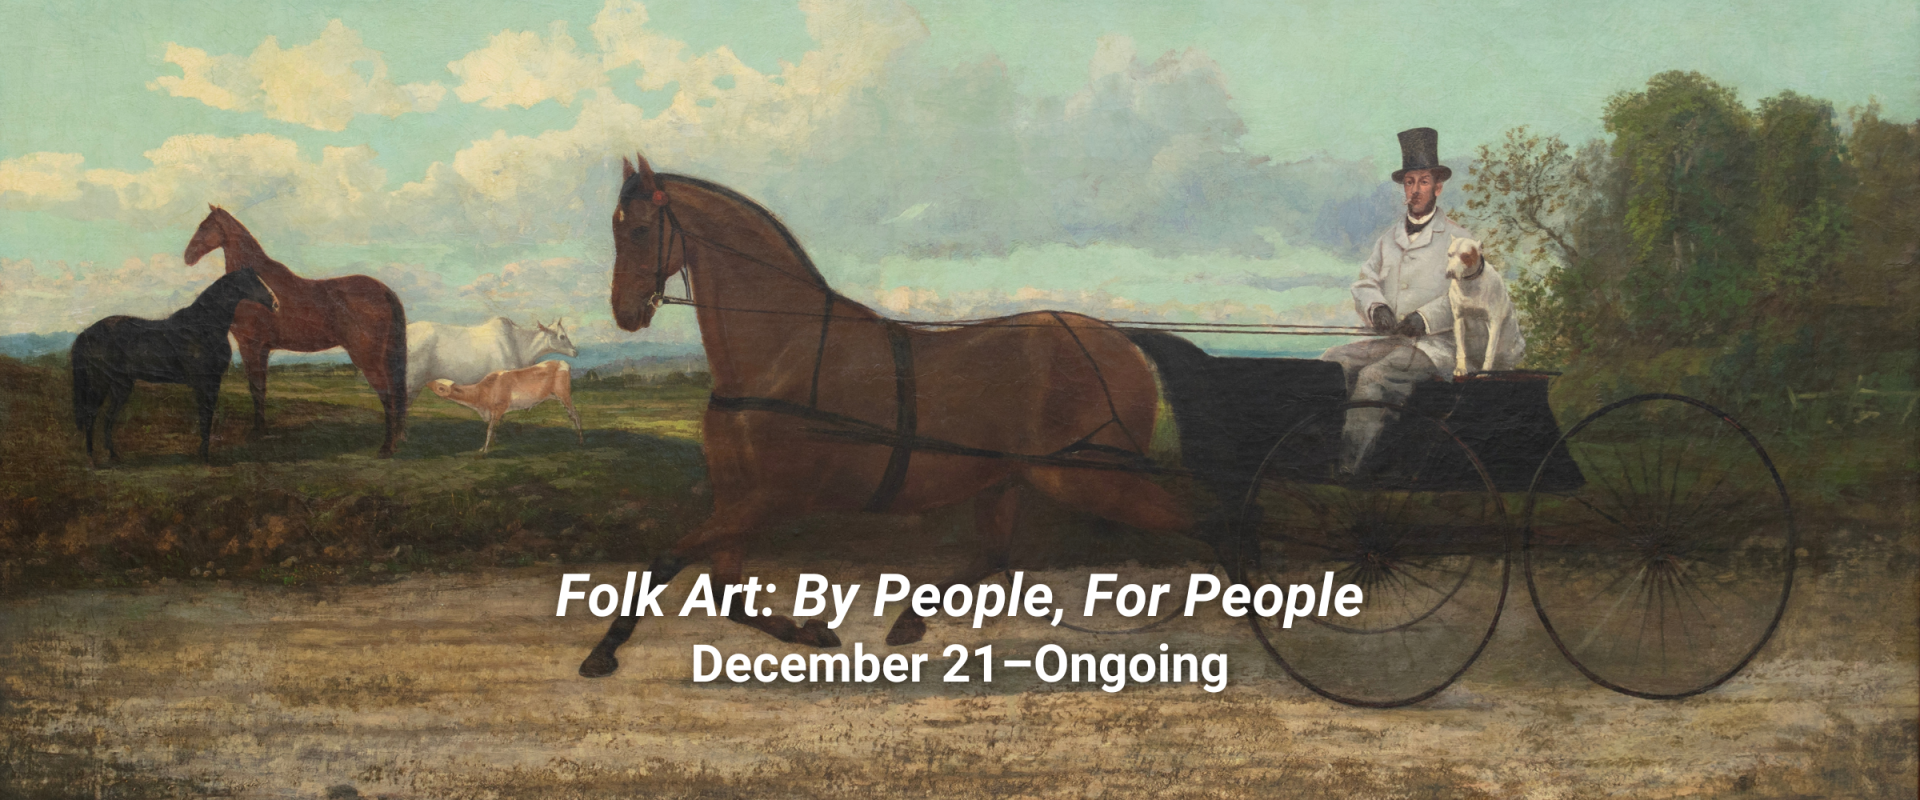 Coming Together Through Folk Art – Everhart Museum